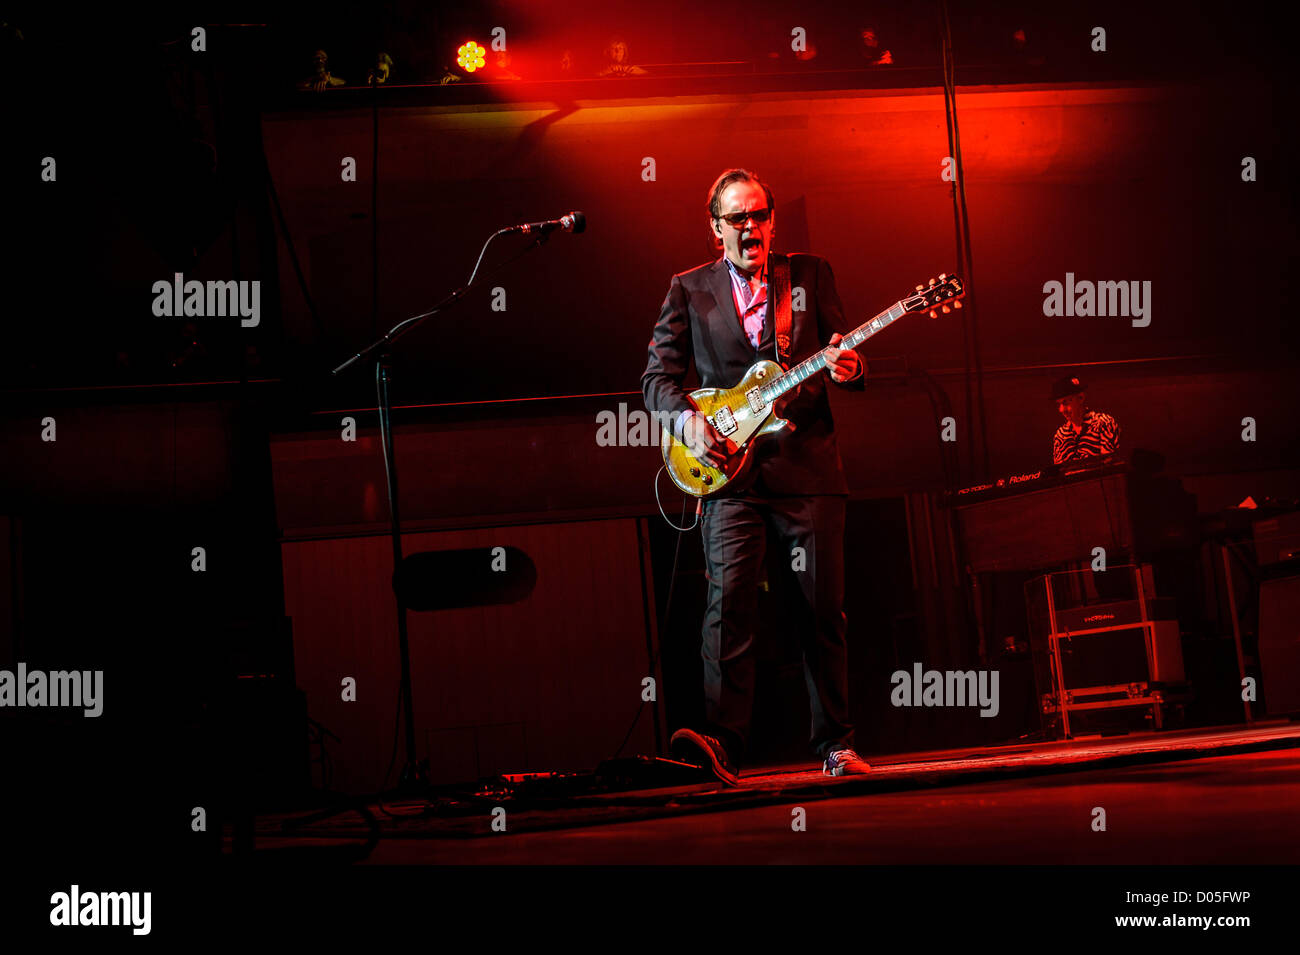 17 novembre 2012 - Toronto, Ontario, Canada - American blues rock guitariste et chanteur Joe Bonamassa effectuée sold out show au Roy Thompson Hall de Toronto. (Crédit Image : © Vidyashev ZUMAPRESS.com)/Igor Banque D'Images